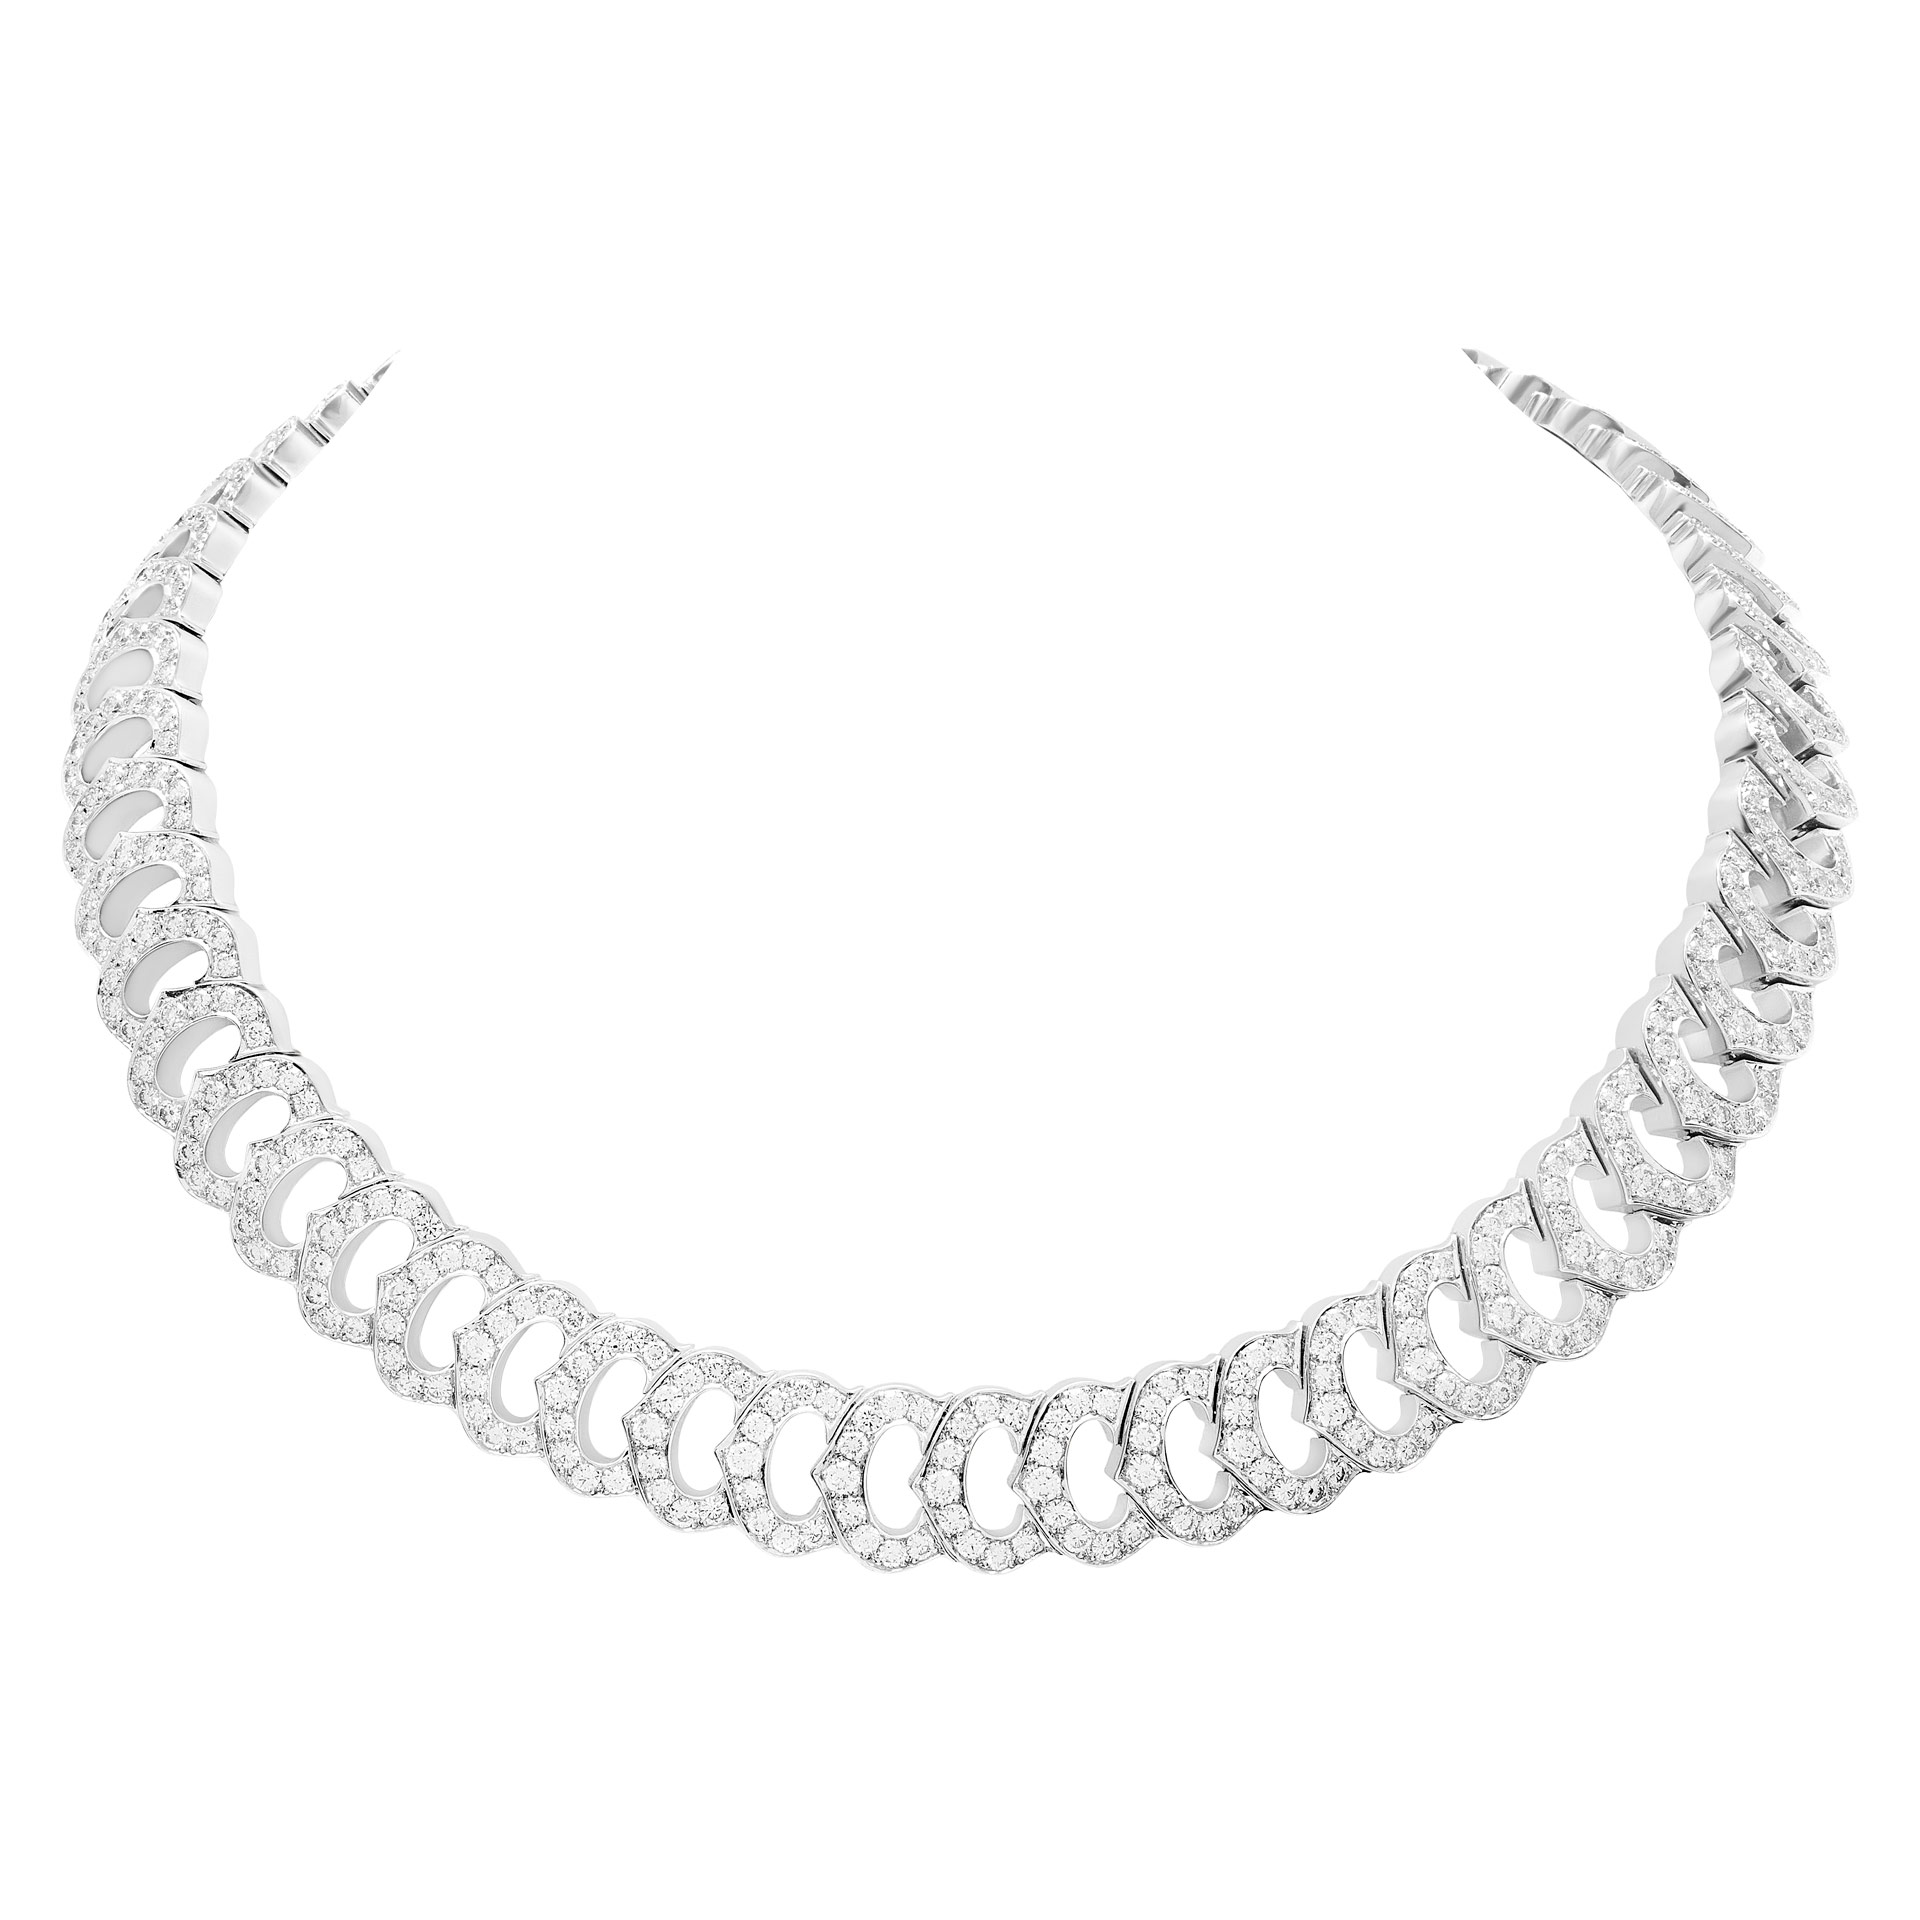 Cartier "C de Cartier" choker necklace, approximately 19.54 cts in diamonds